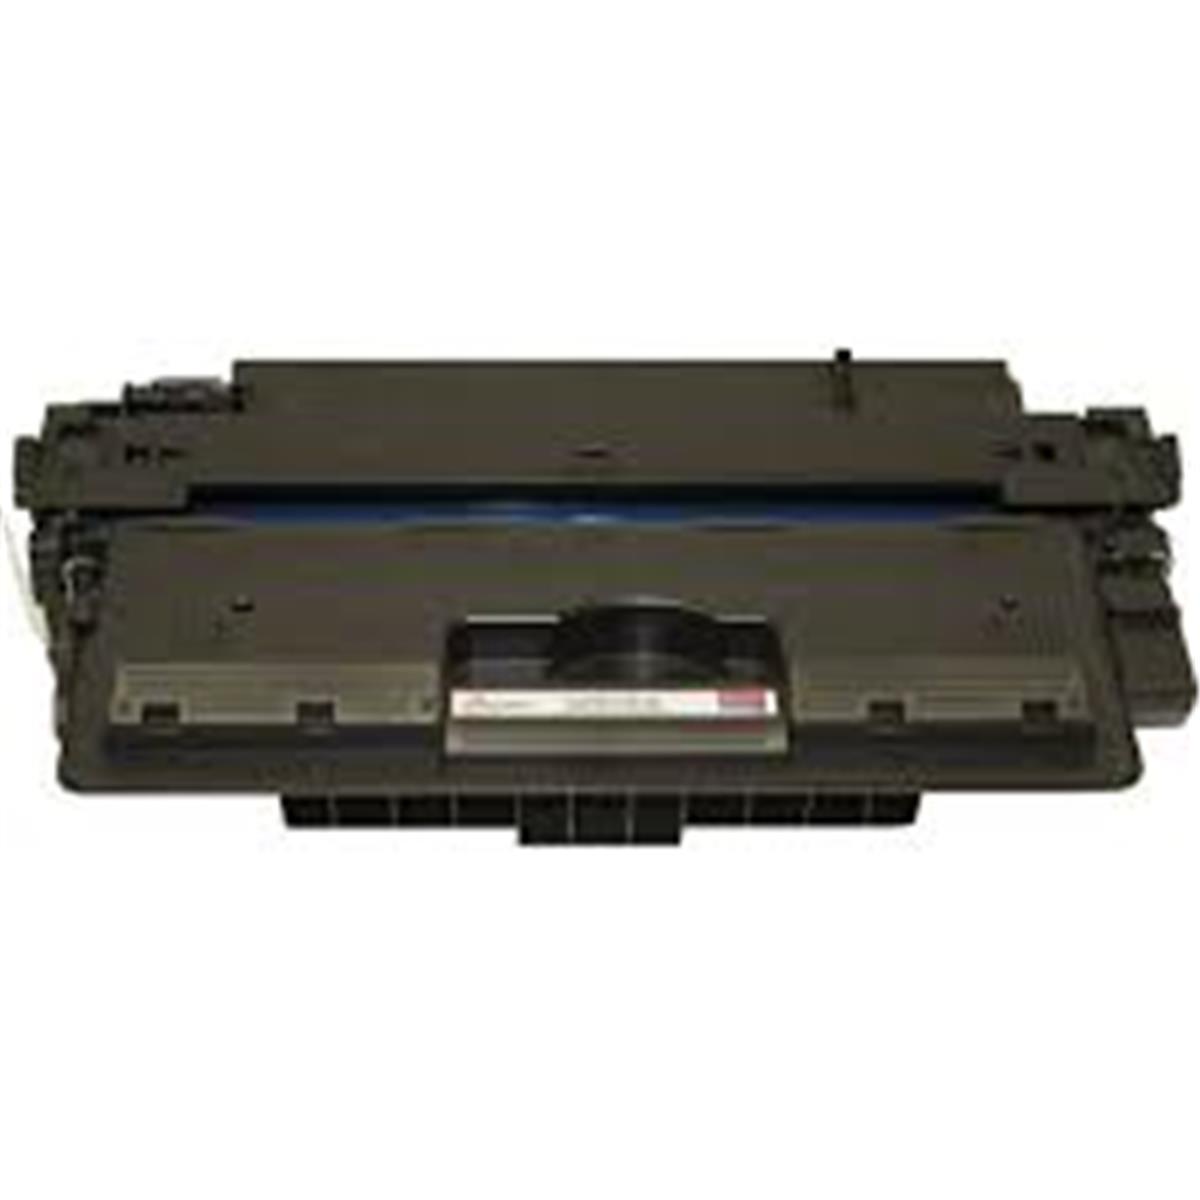 Picture of Abilityone AB16703514 Alternative 81A Standard Black Toner Cartridge for HP LaserJet Pro M630DN